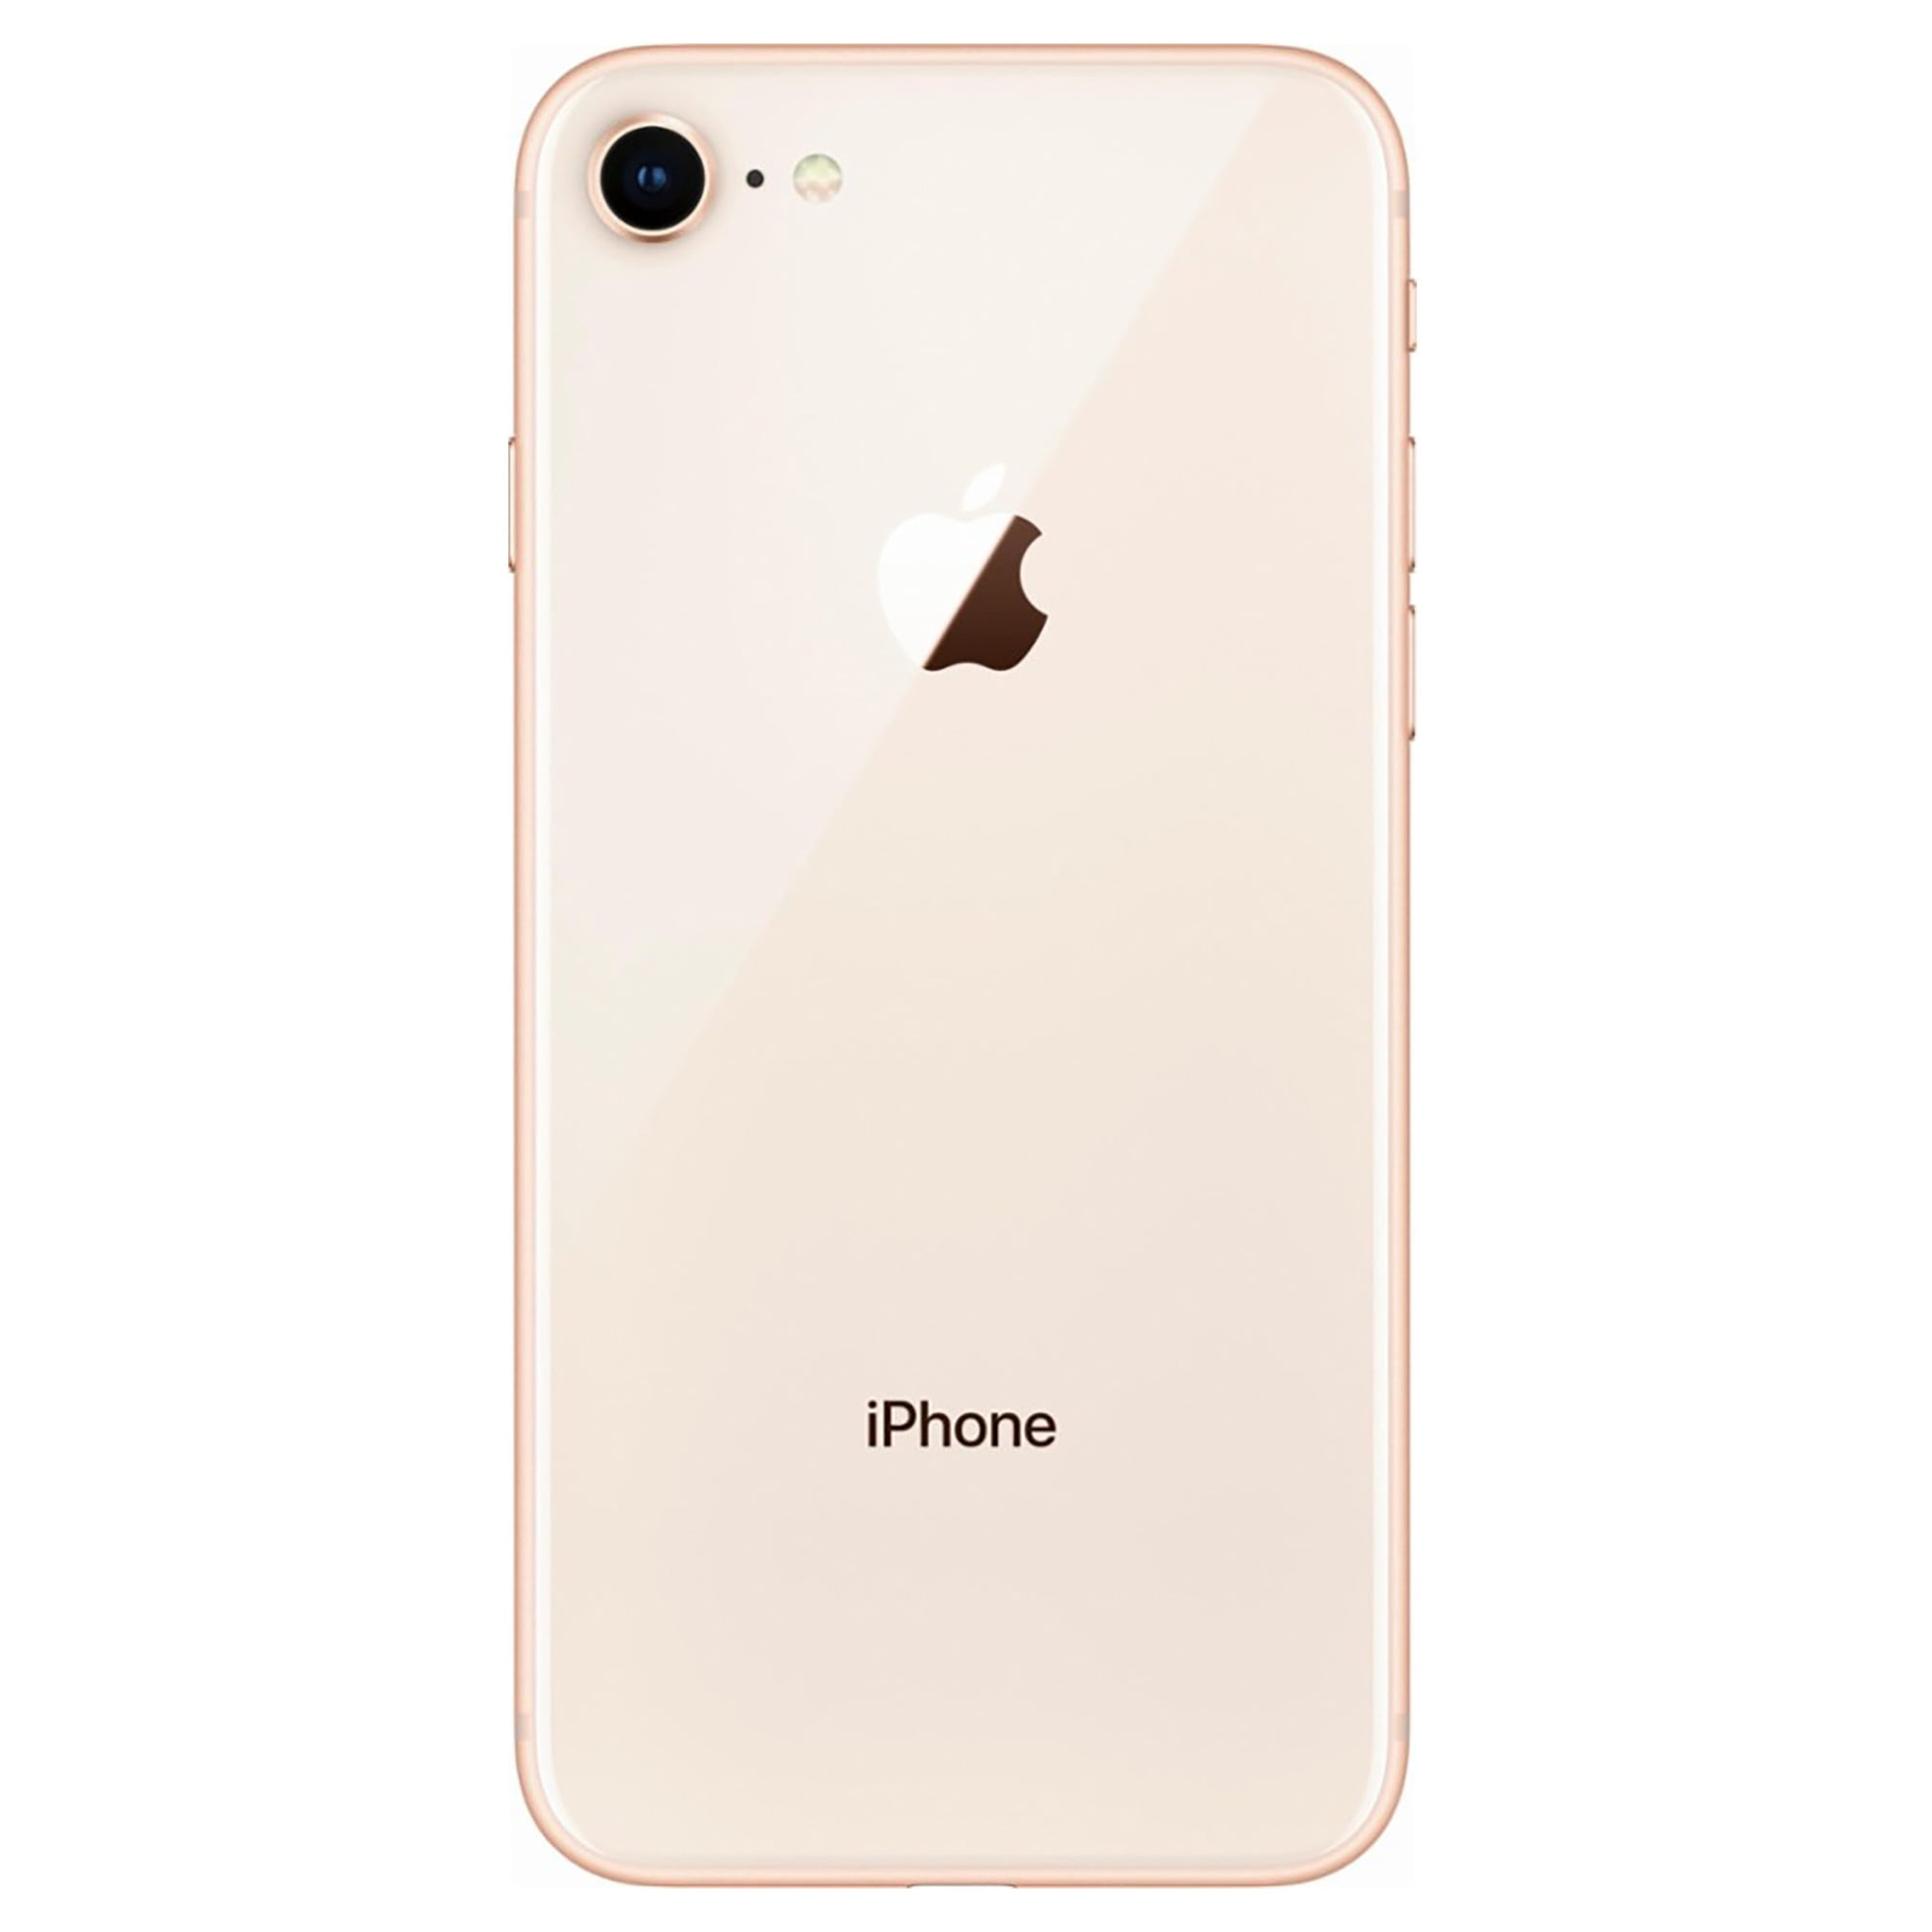 Купить айфон 8 10. Apple iphone 8 Plus 64gb. Apple iphone 8 Plus 256gb. Apple iphone 8 Plus 128 GB Gold (золотой). Iphone 8 Plus 64gb Gold.